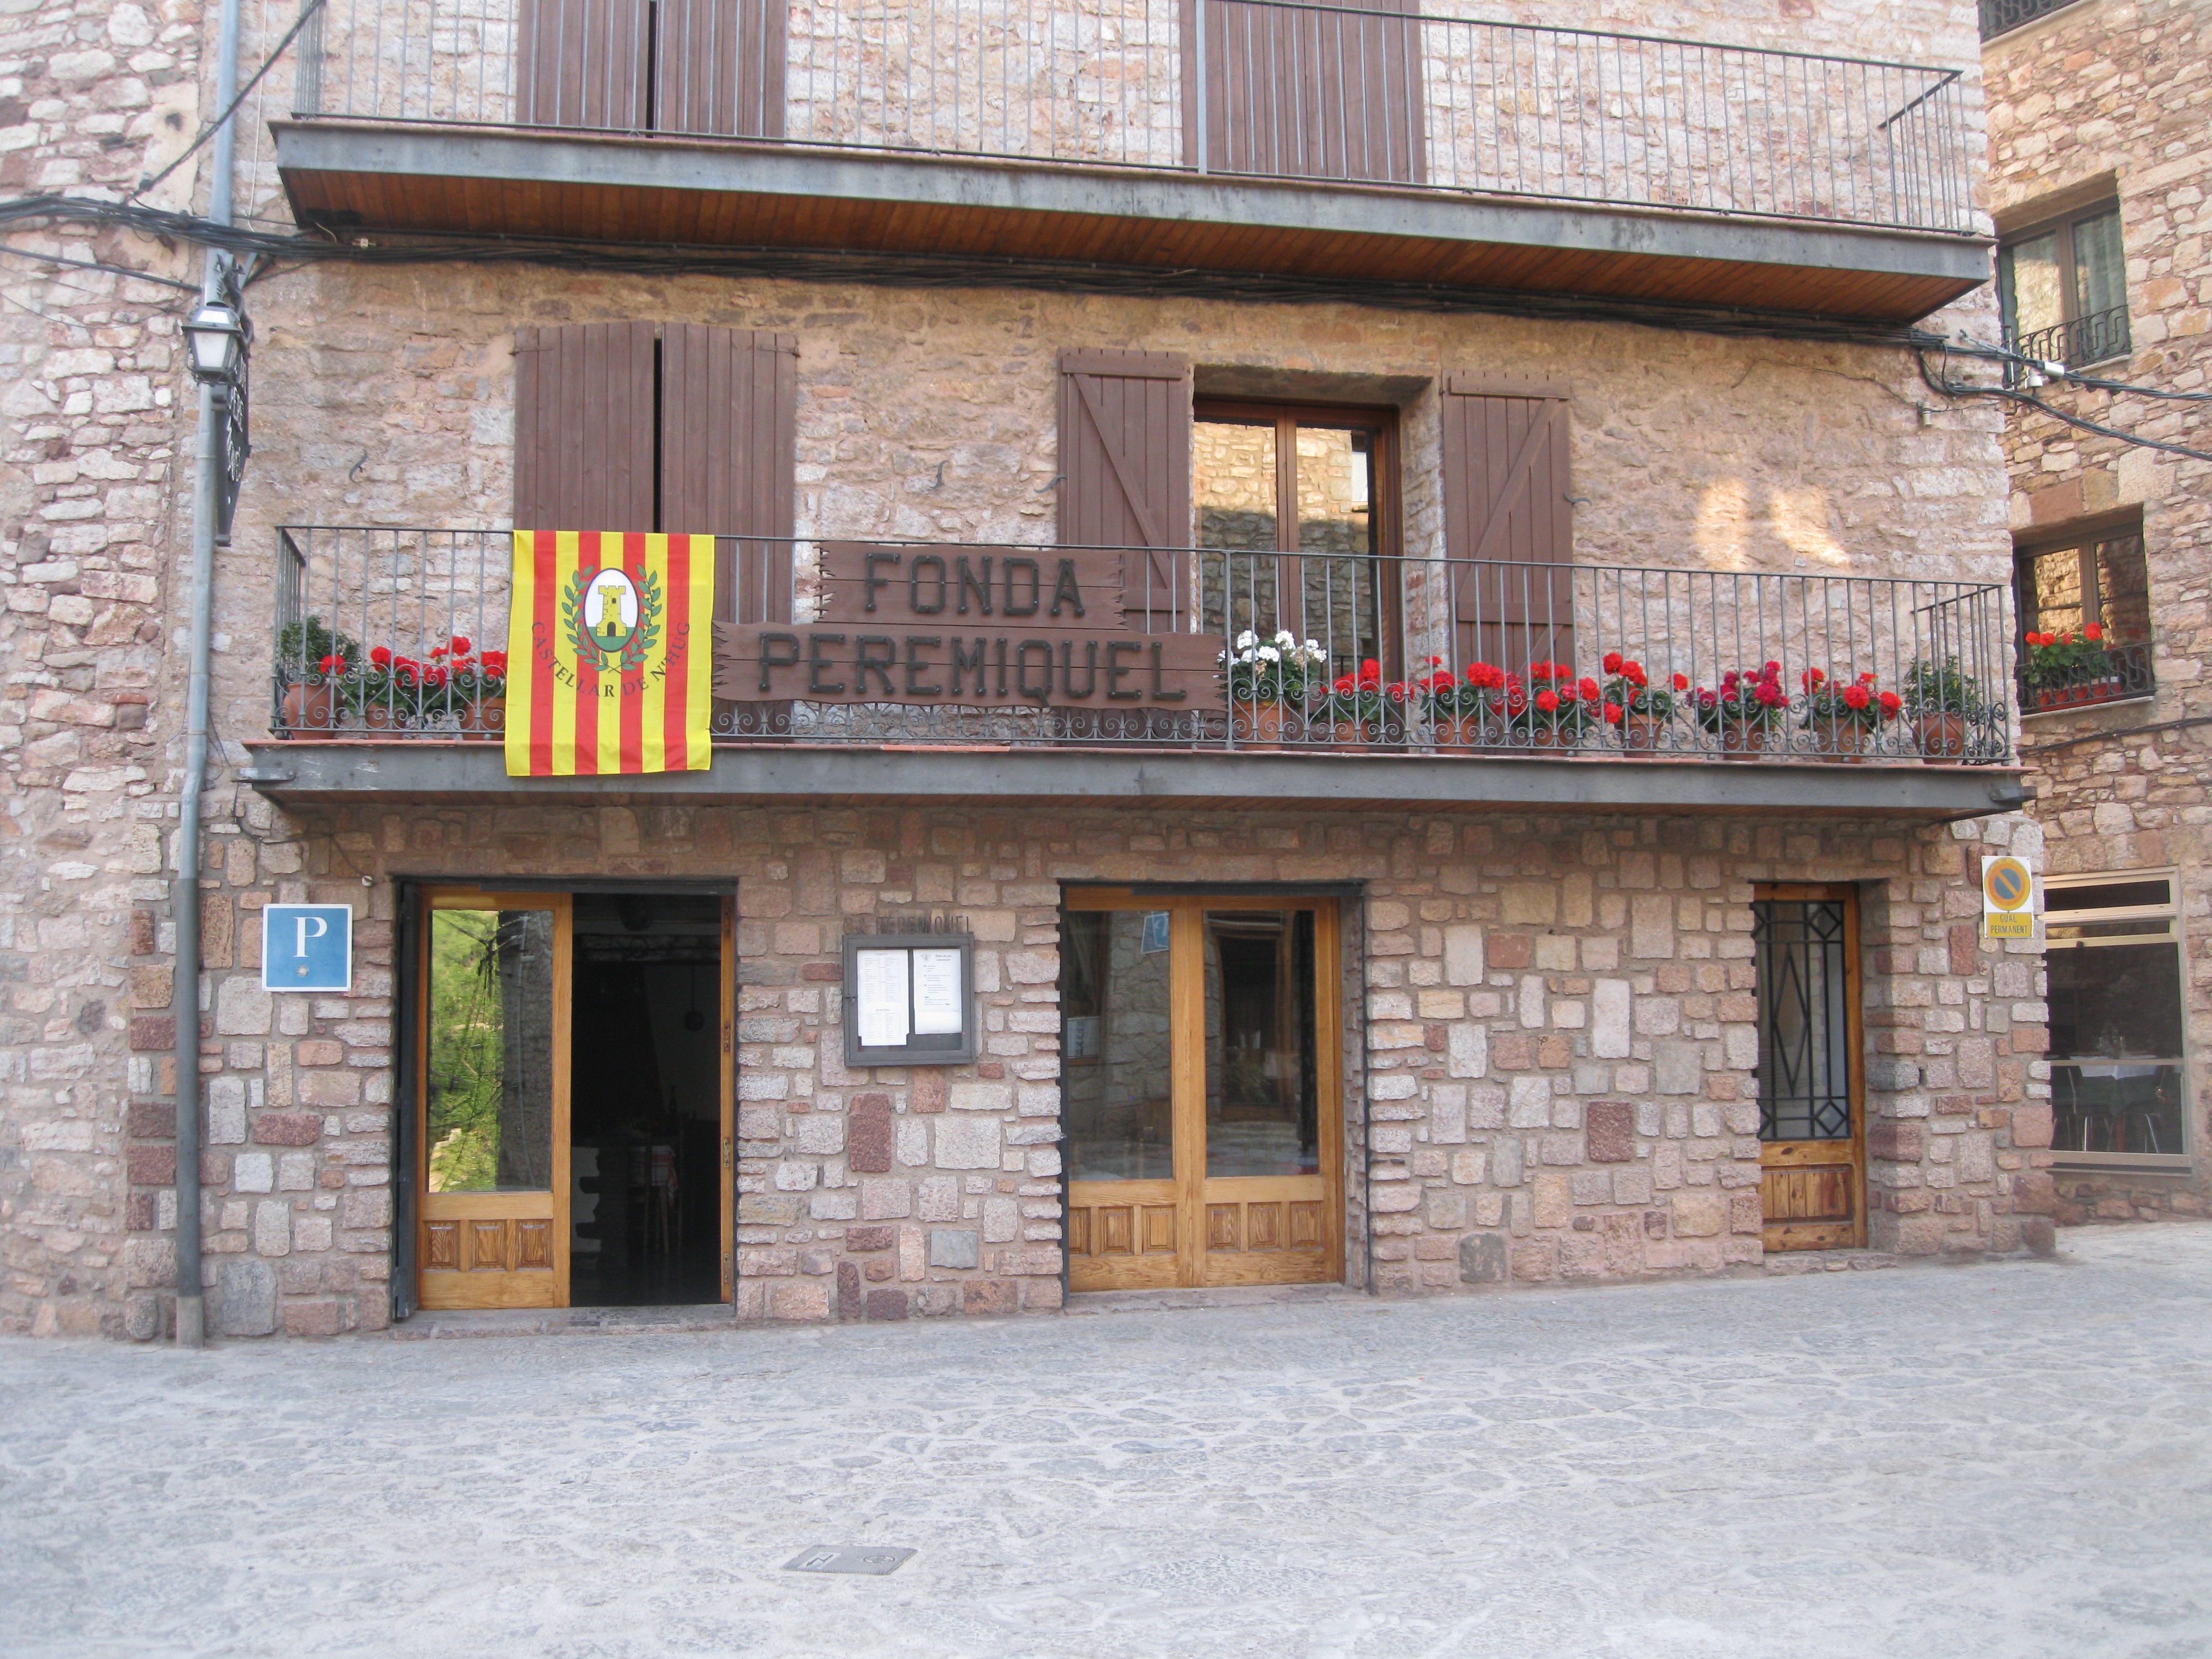 Fonda-Restaurant Pere Miquel